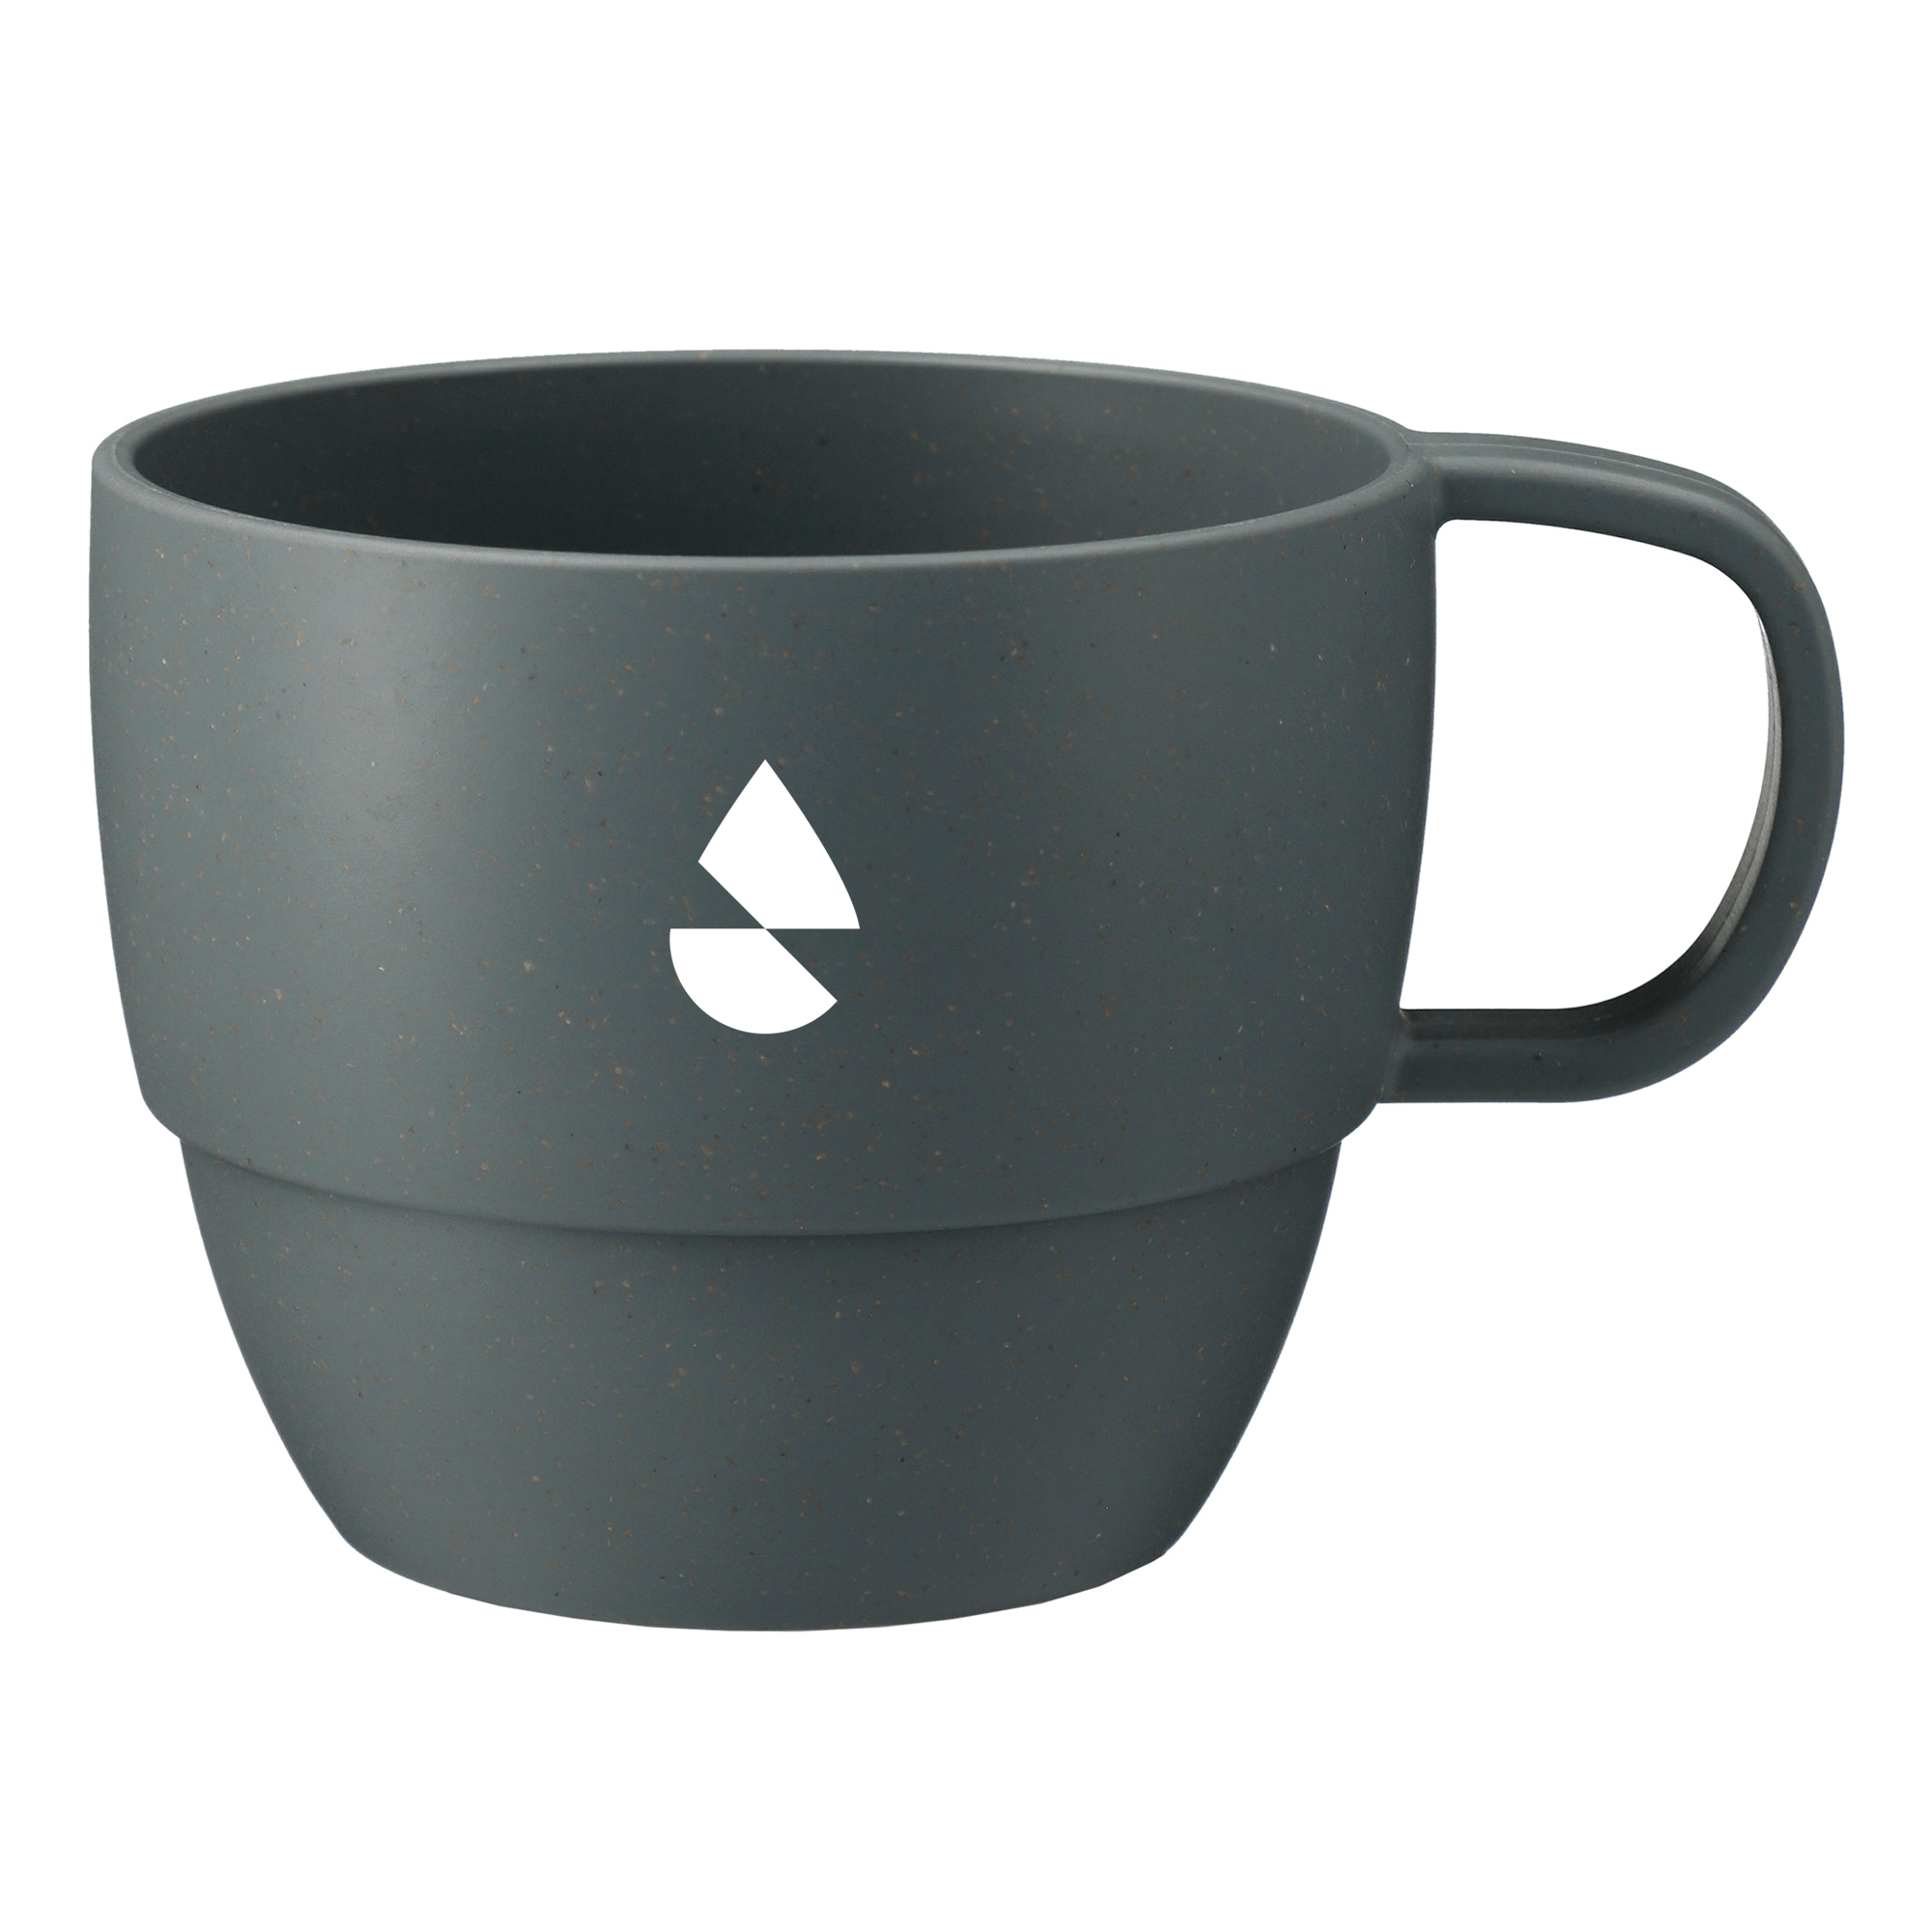 branded mug with company logo